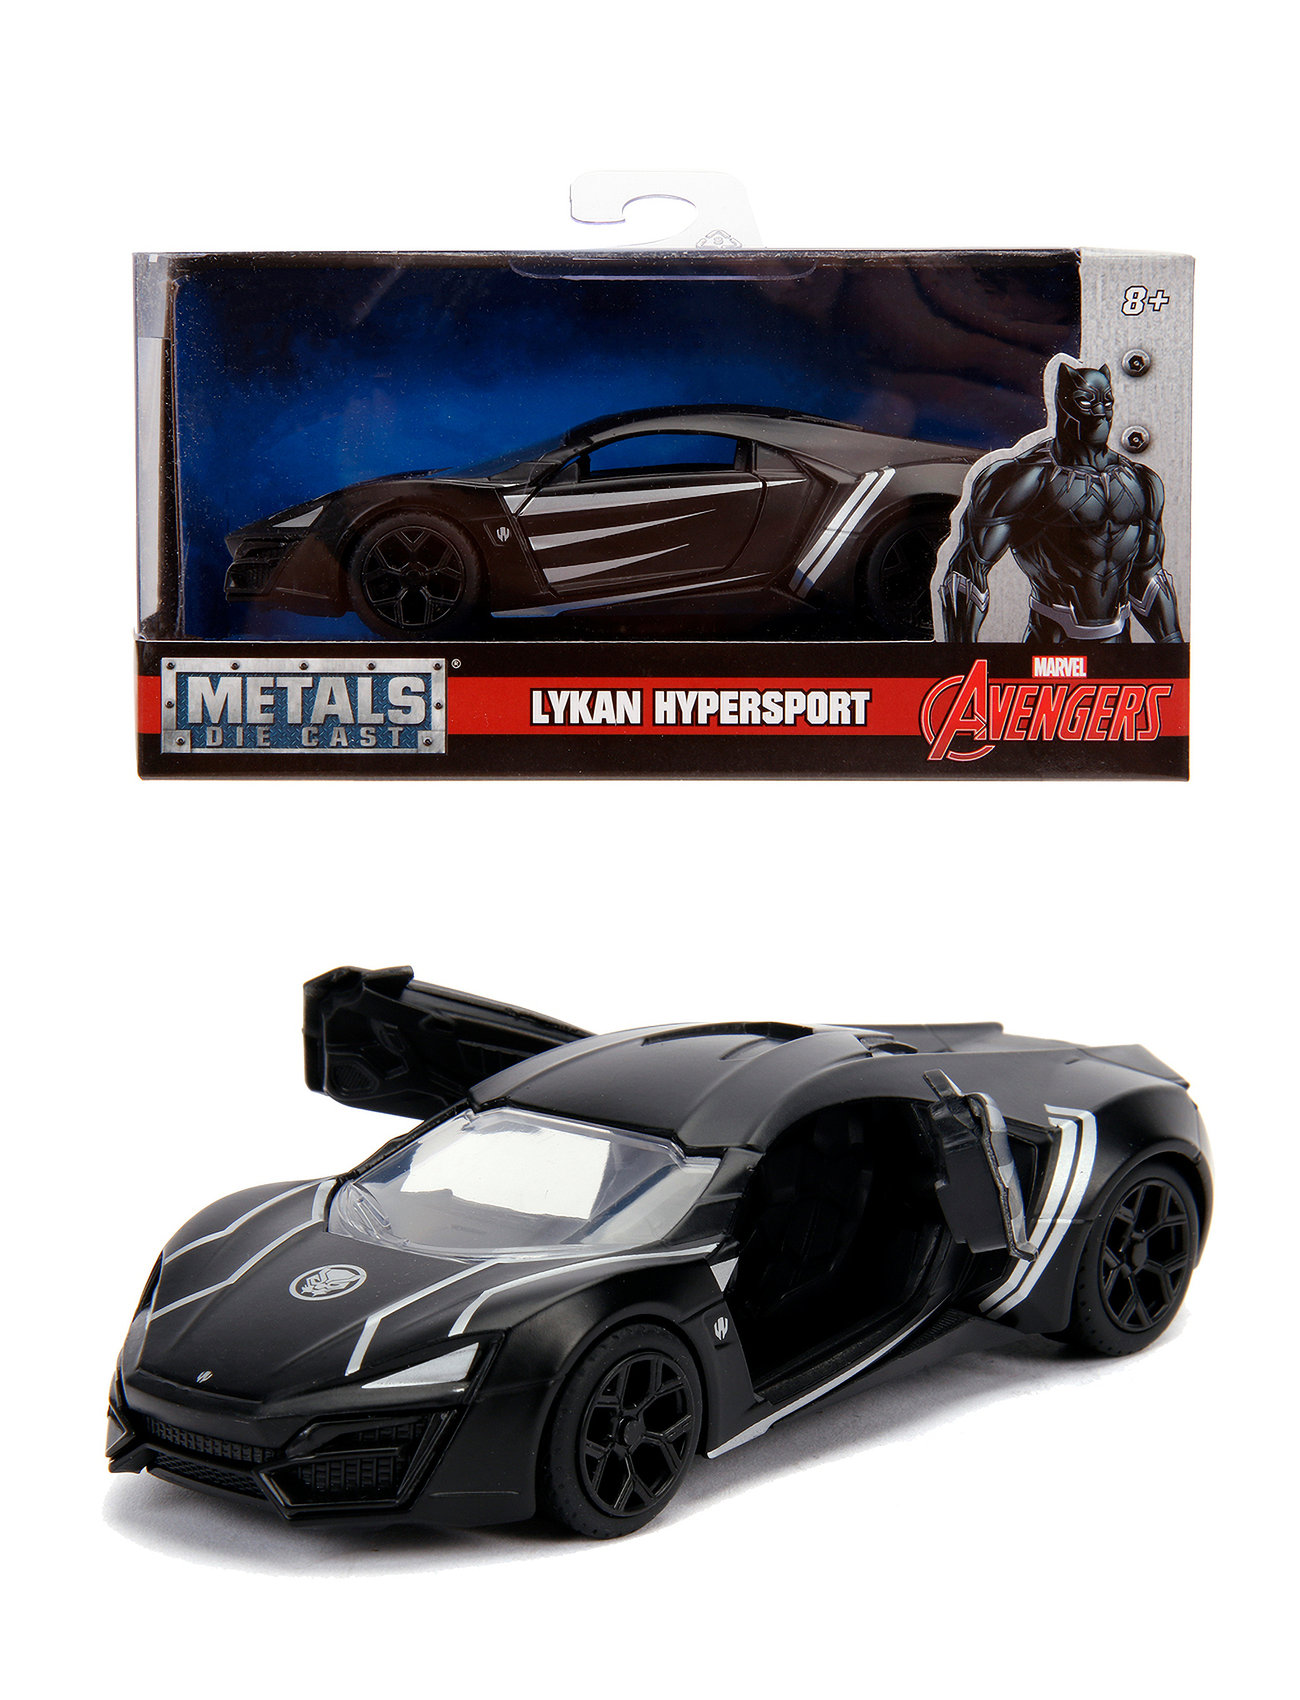 Marvel Black Panther 1:32 Toys Toy Cars & Vehicles Black Jada Toys